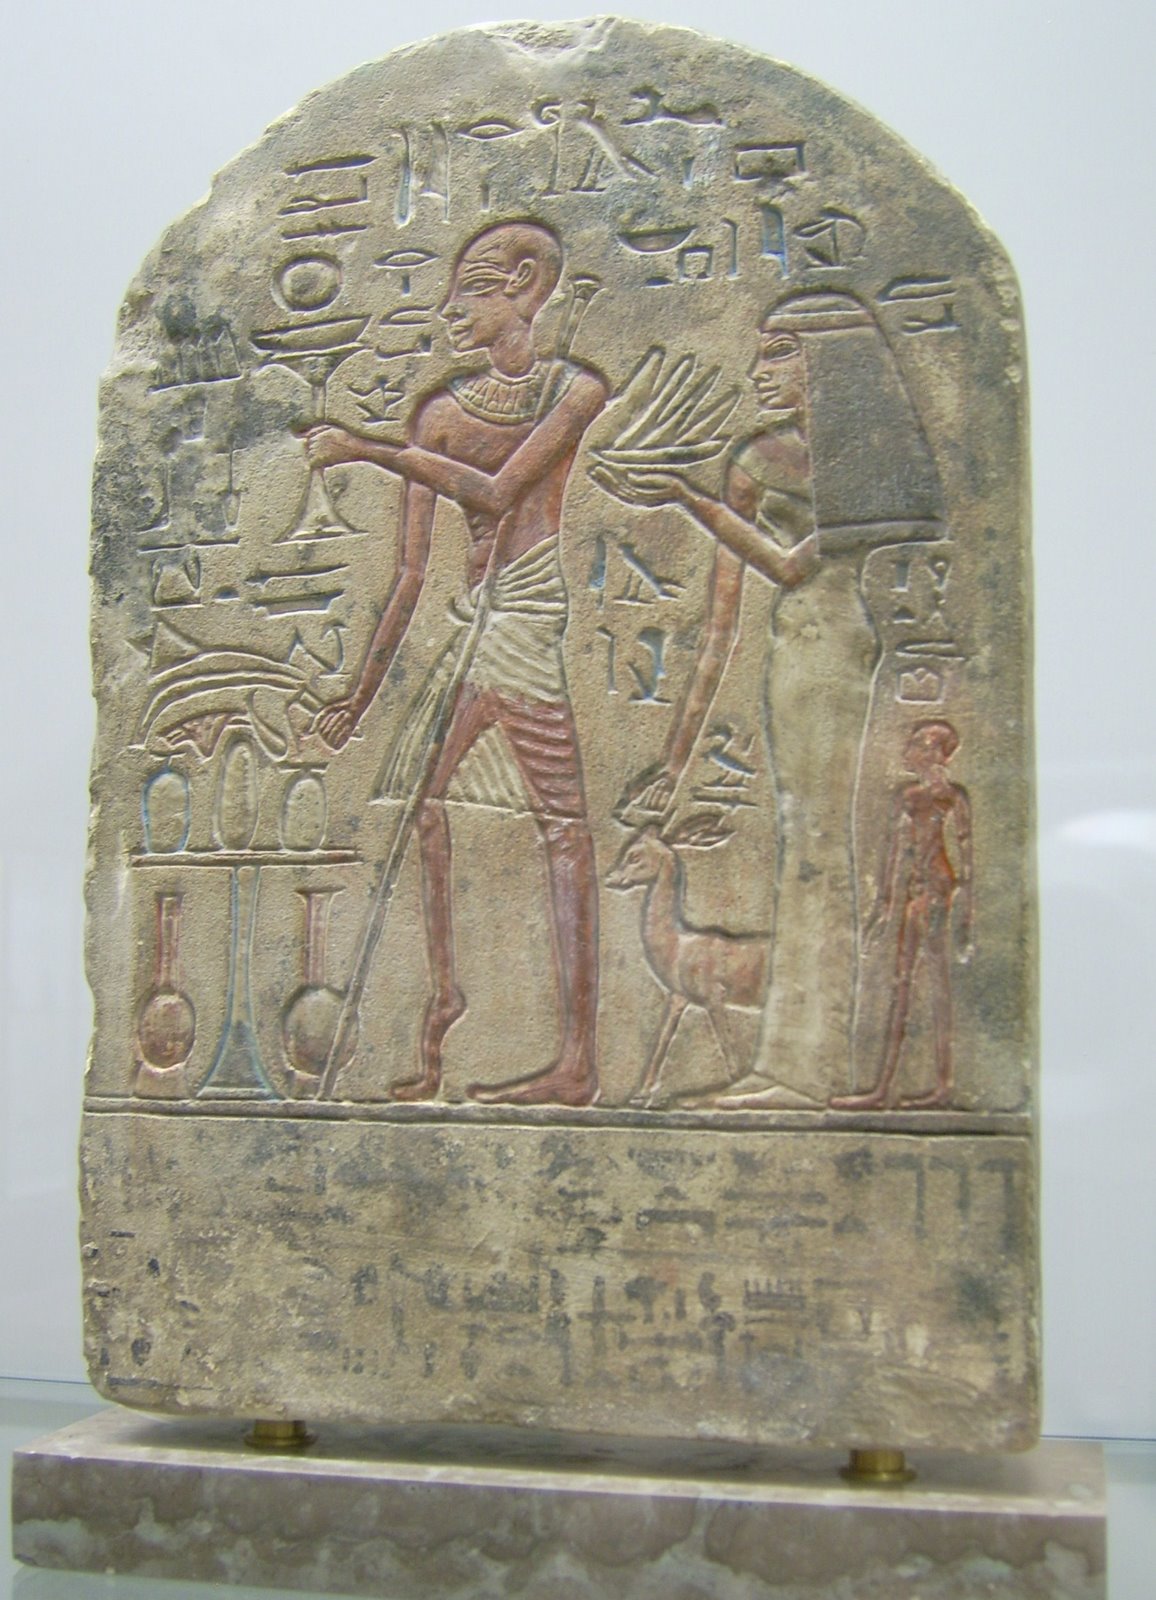 https://elkamel.files.wordpress.com/2019/03/polio-in-ancient-egypt3.jpg?w=800